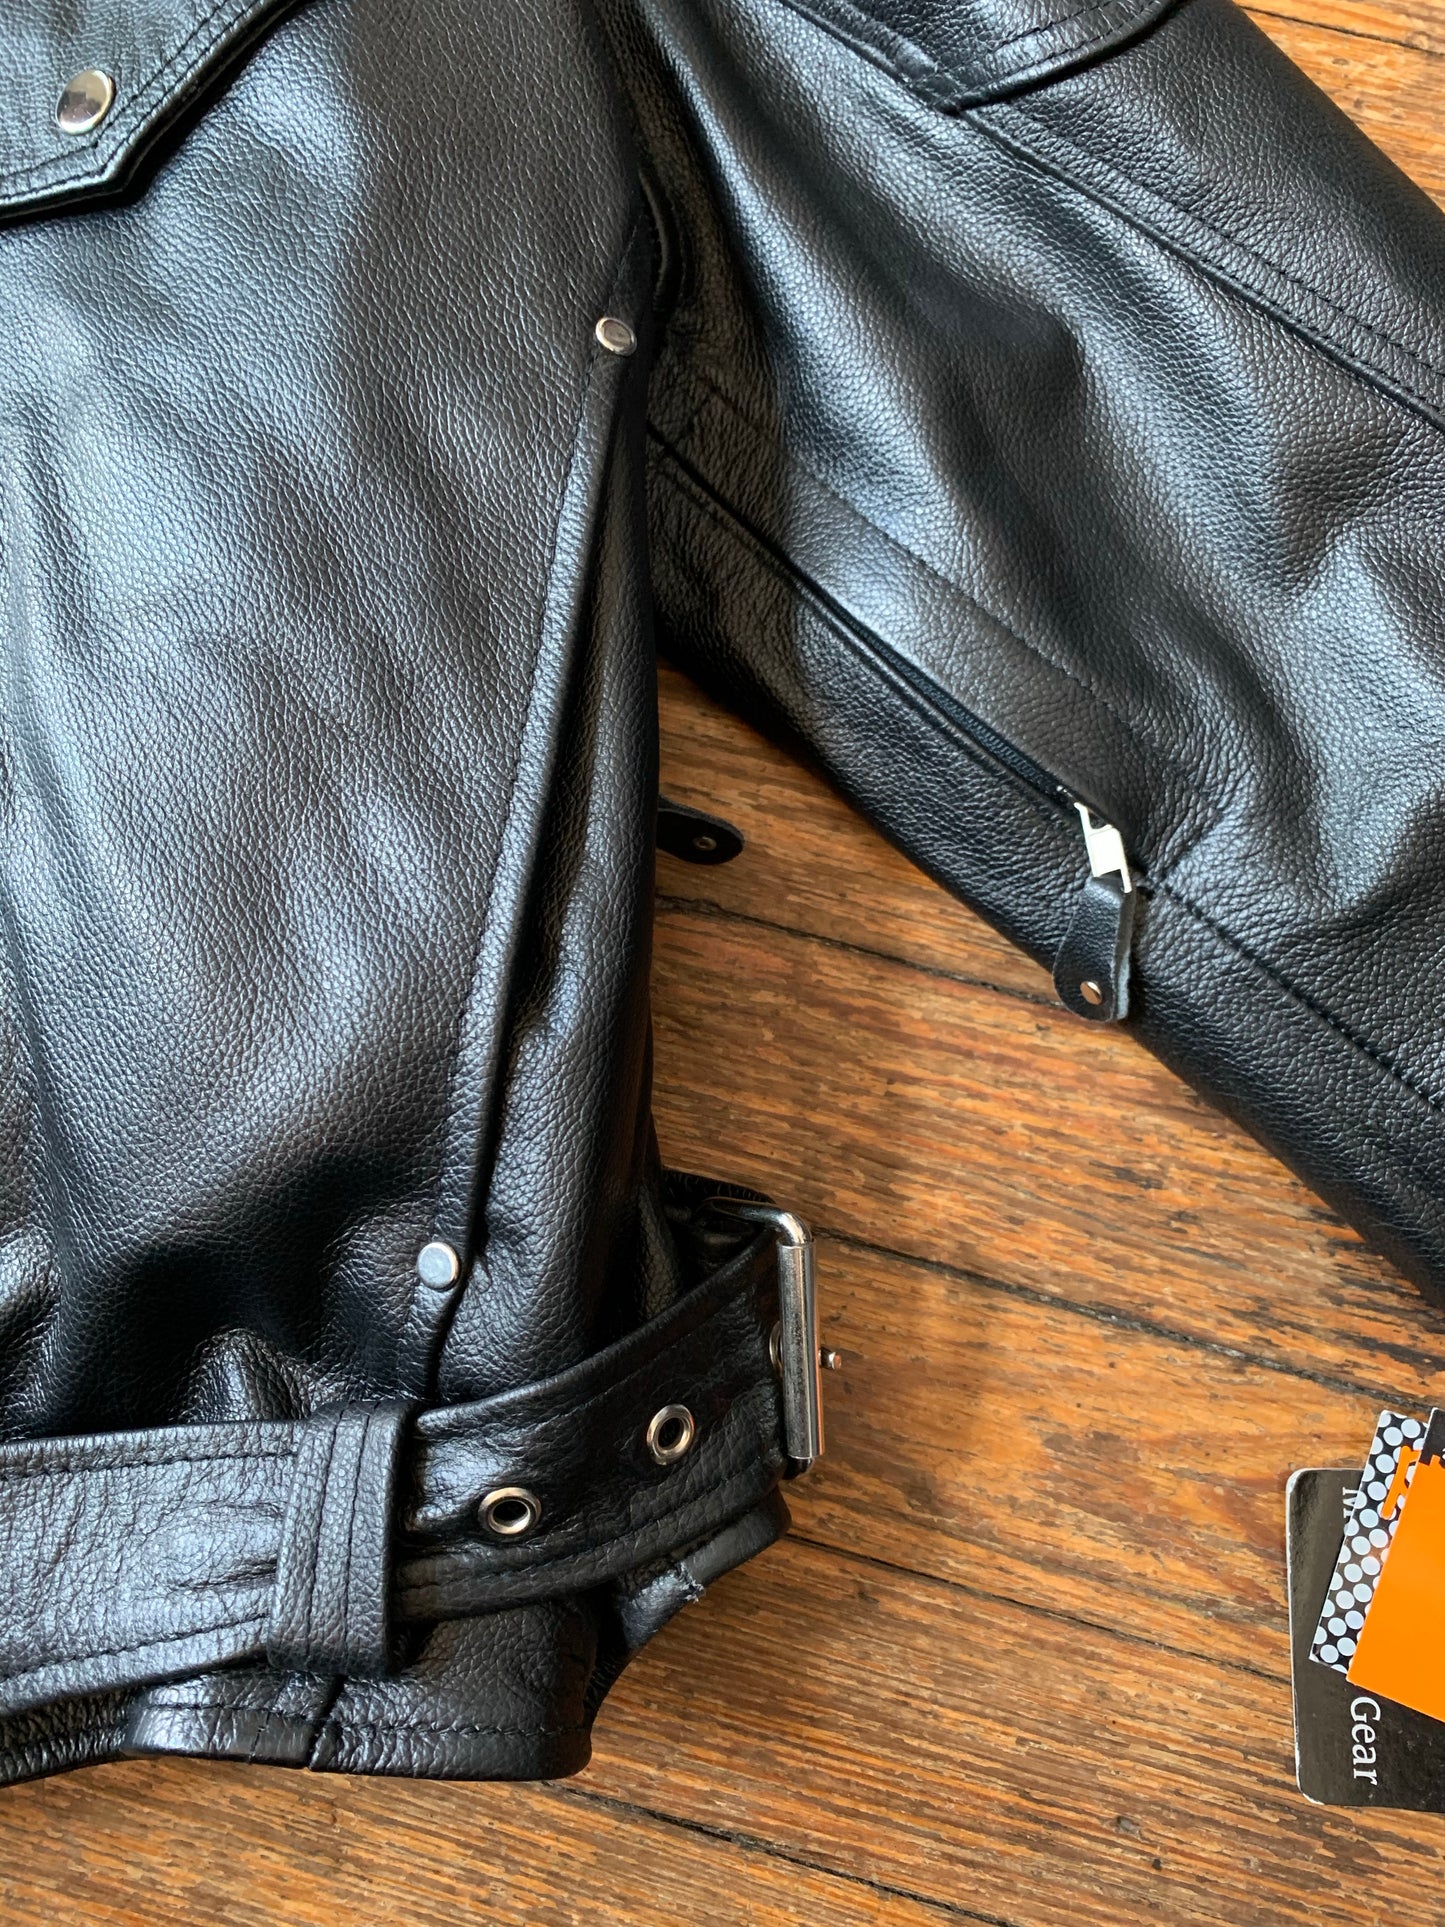 NWT Black Leather Jafrum Motorcycle Jacket w/ Zip Out Liner